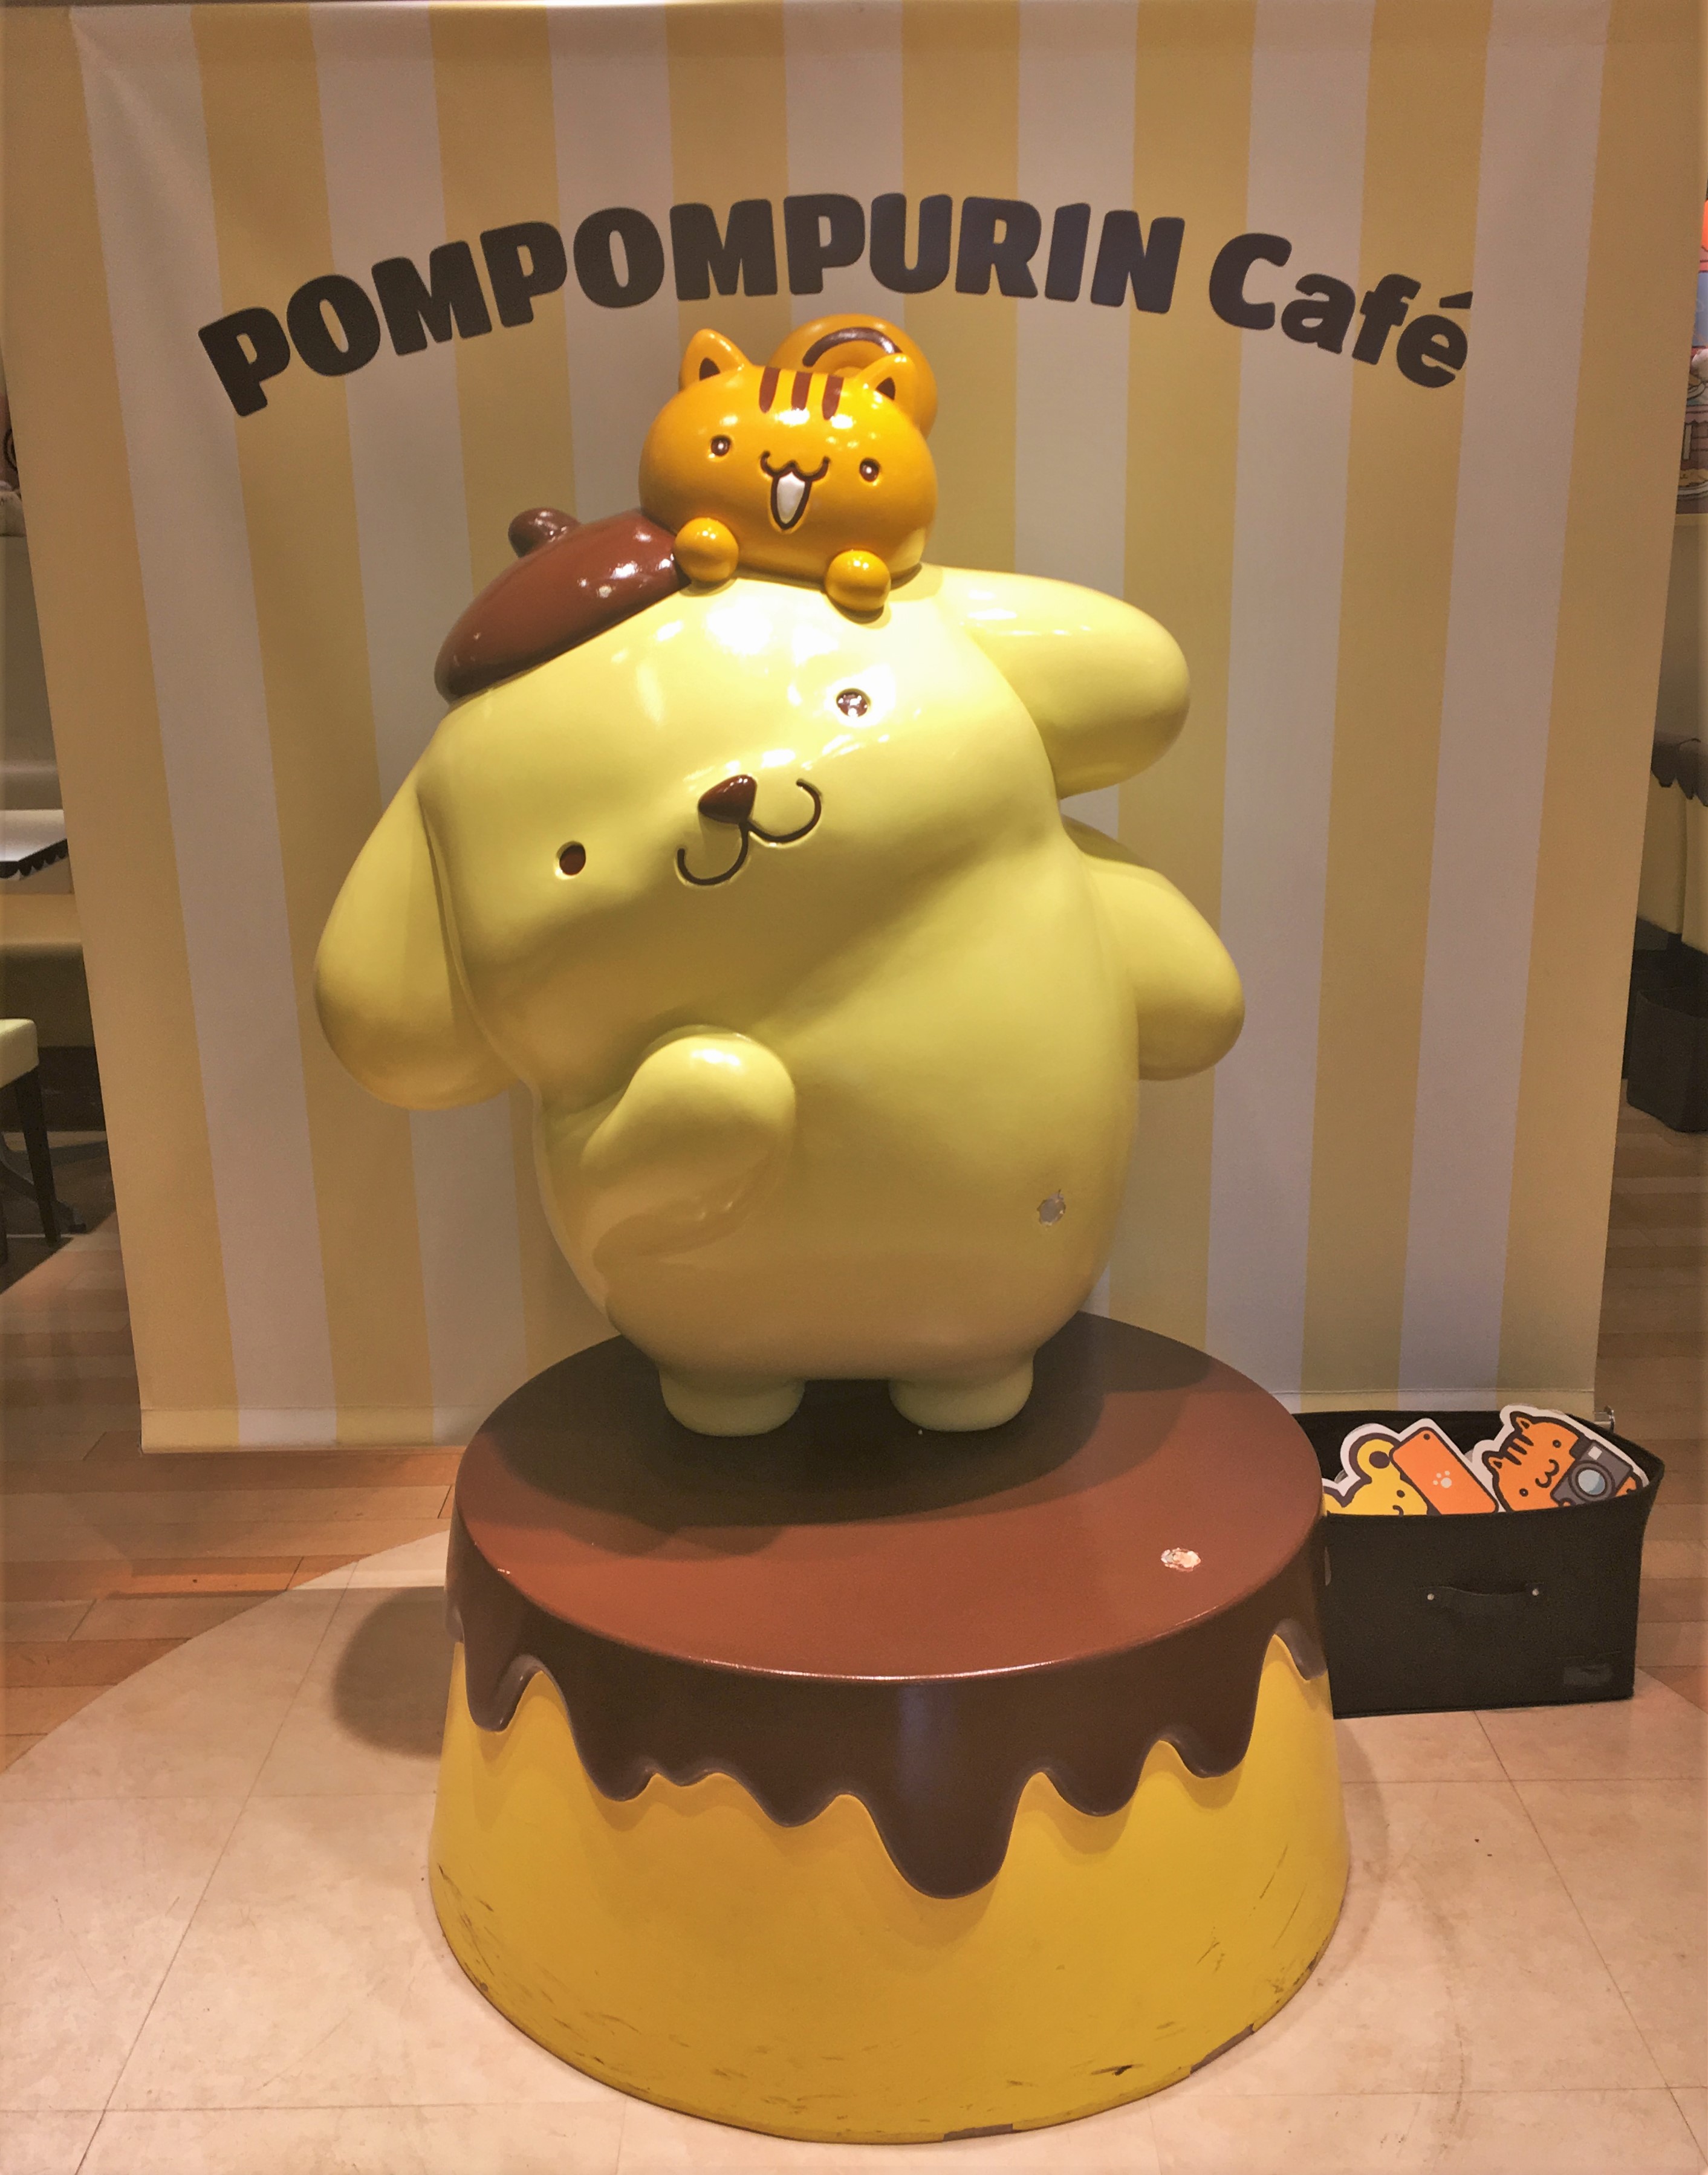 Pompompurin Pop-up Cafe in Osaka 2021 - Events in Osaka - Japan Travel